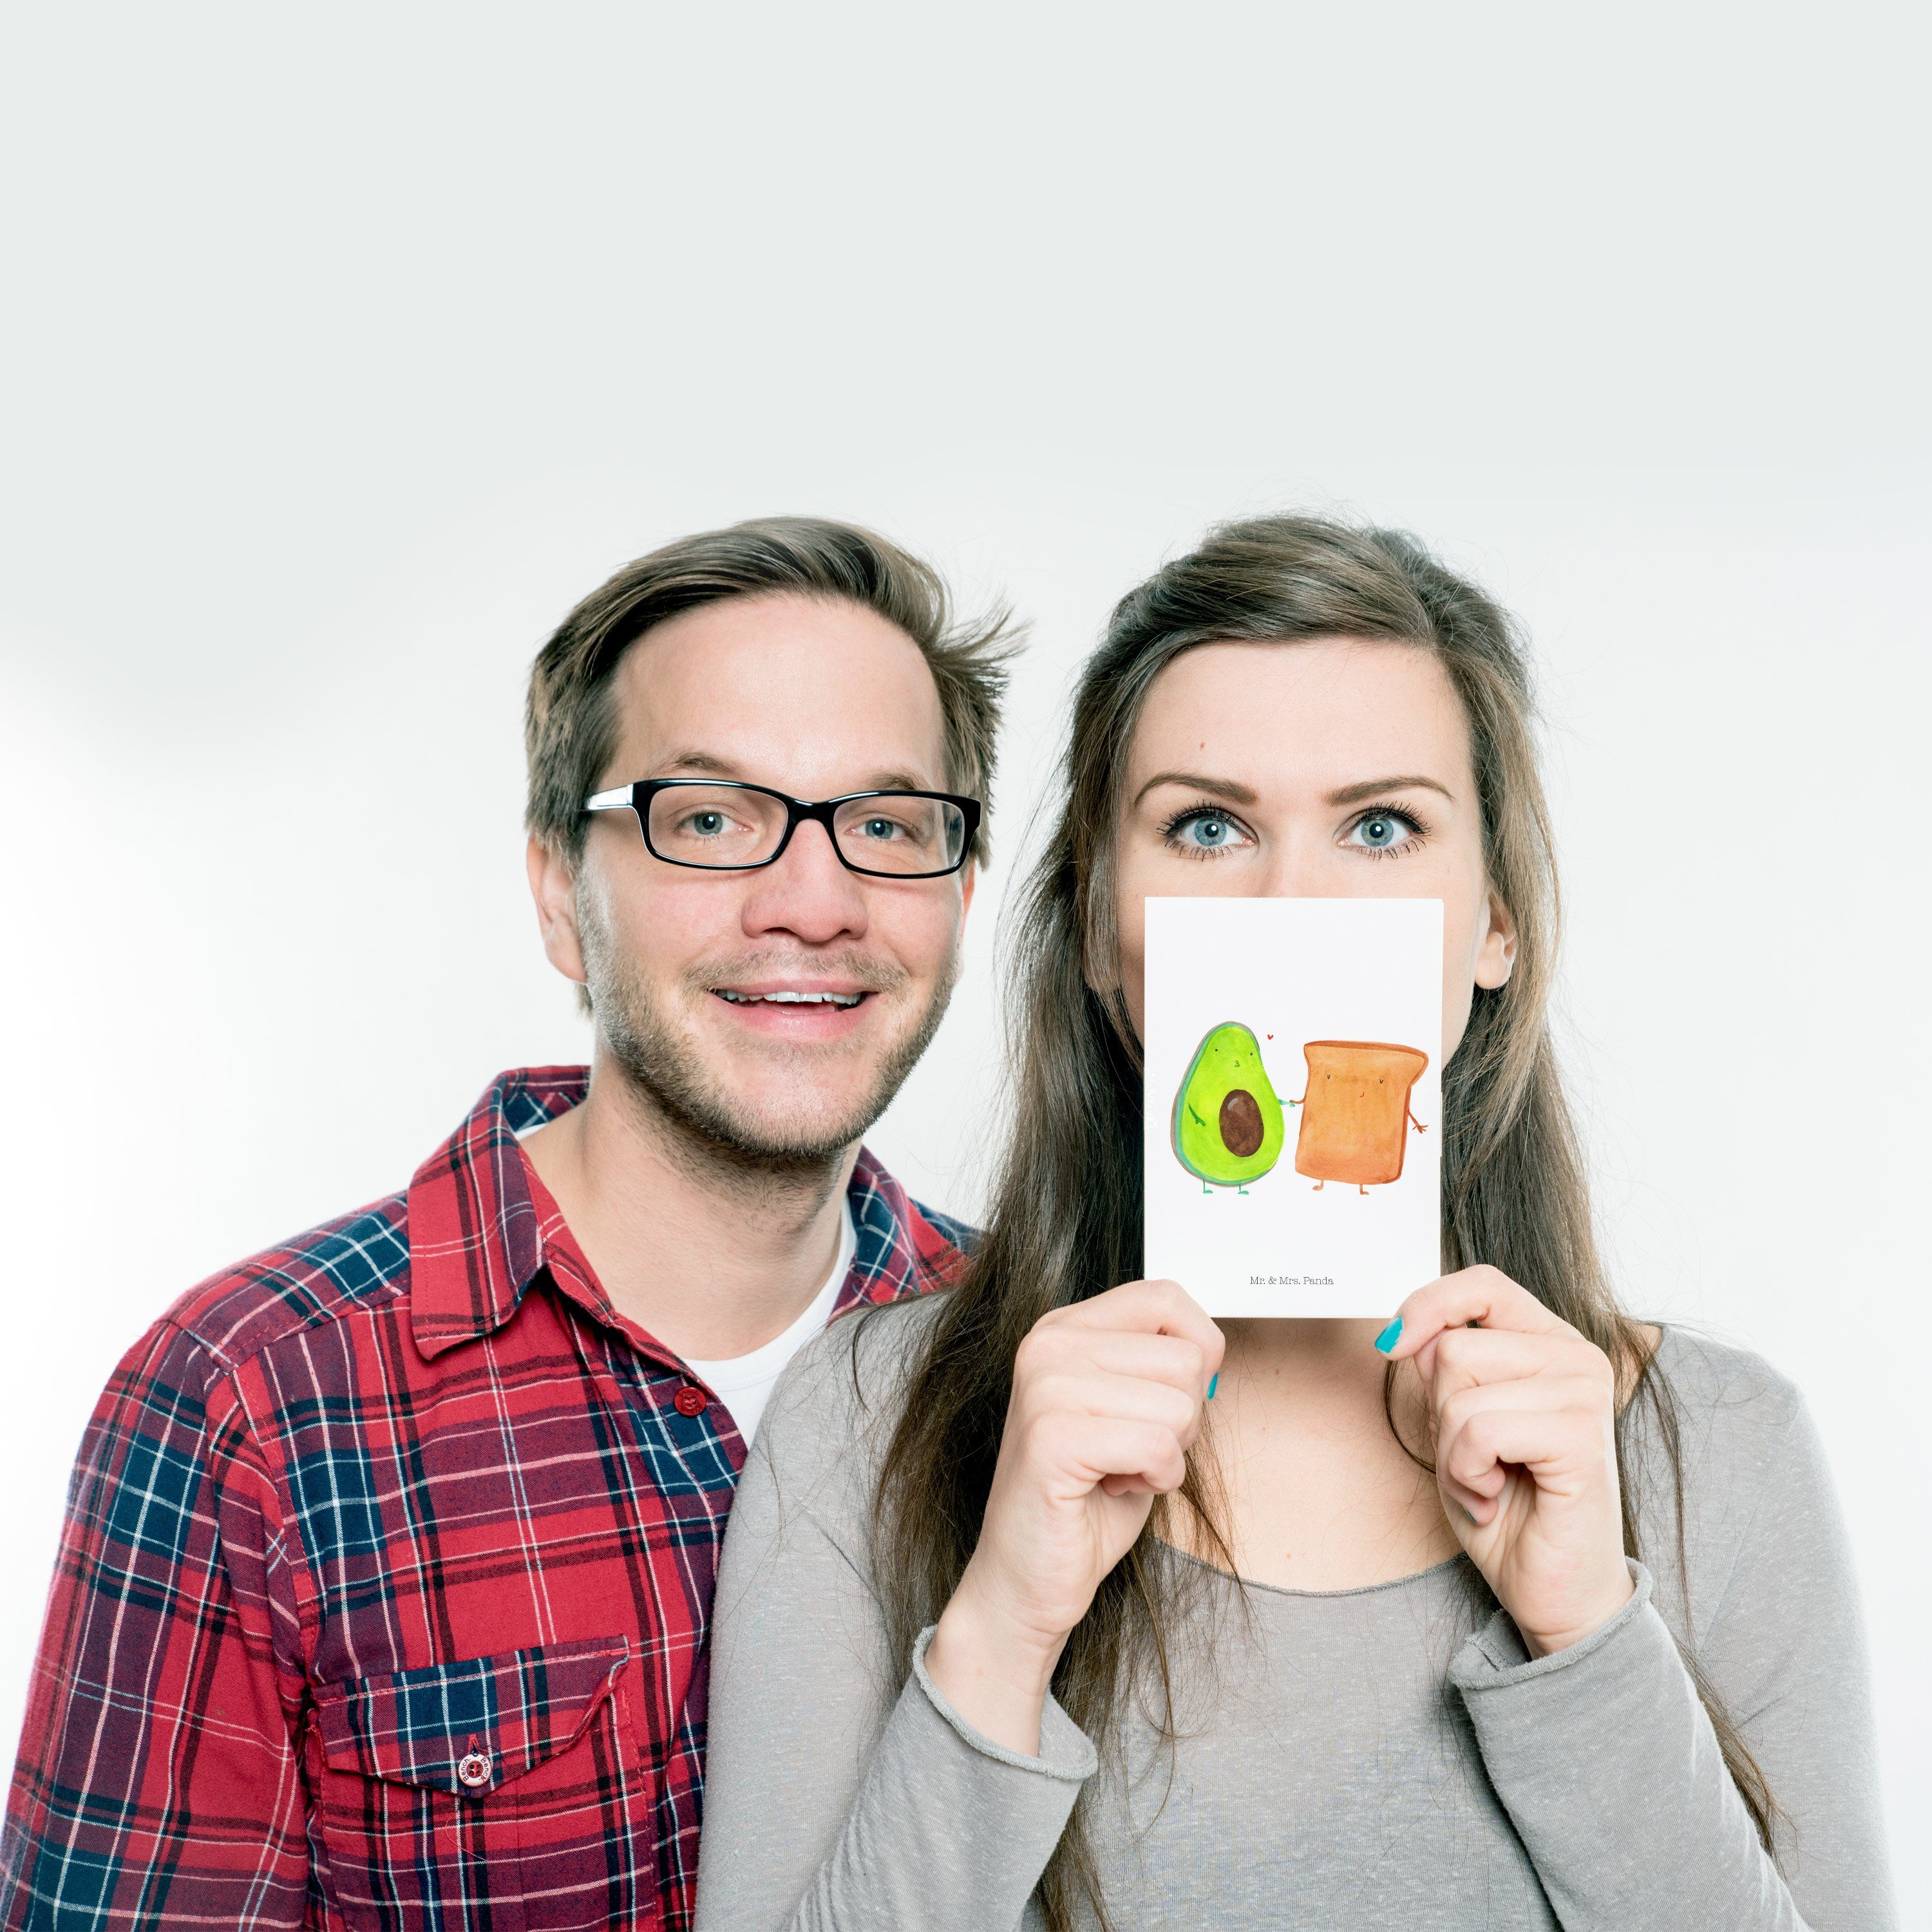 Mr. & Mrs. Liebespaar, Avocado Postkarte Weiß + Panda - Freu Toast Vegan, Grußkarte, - Geschenk